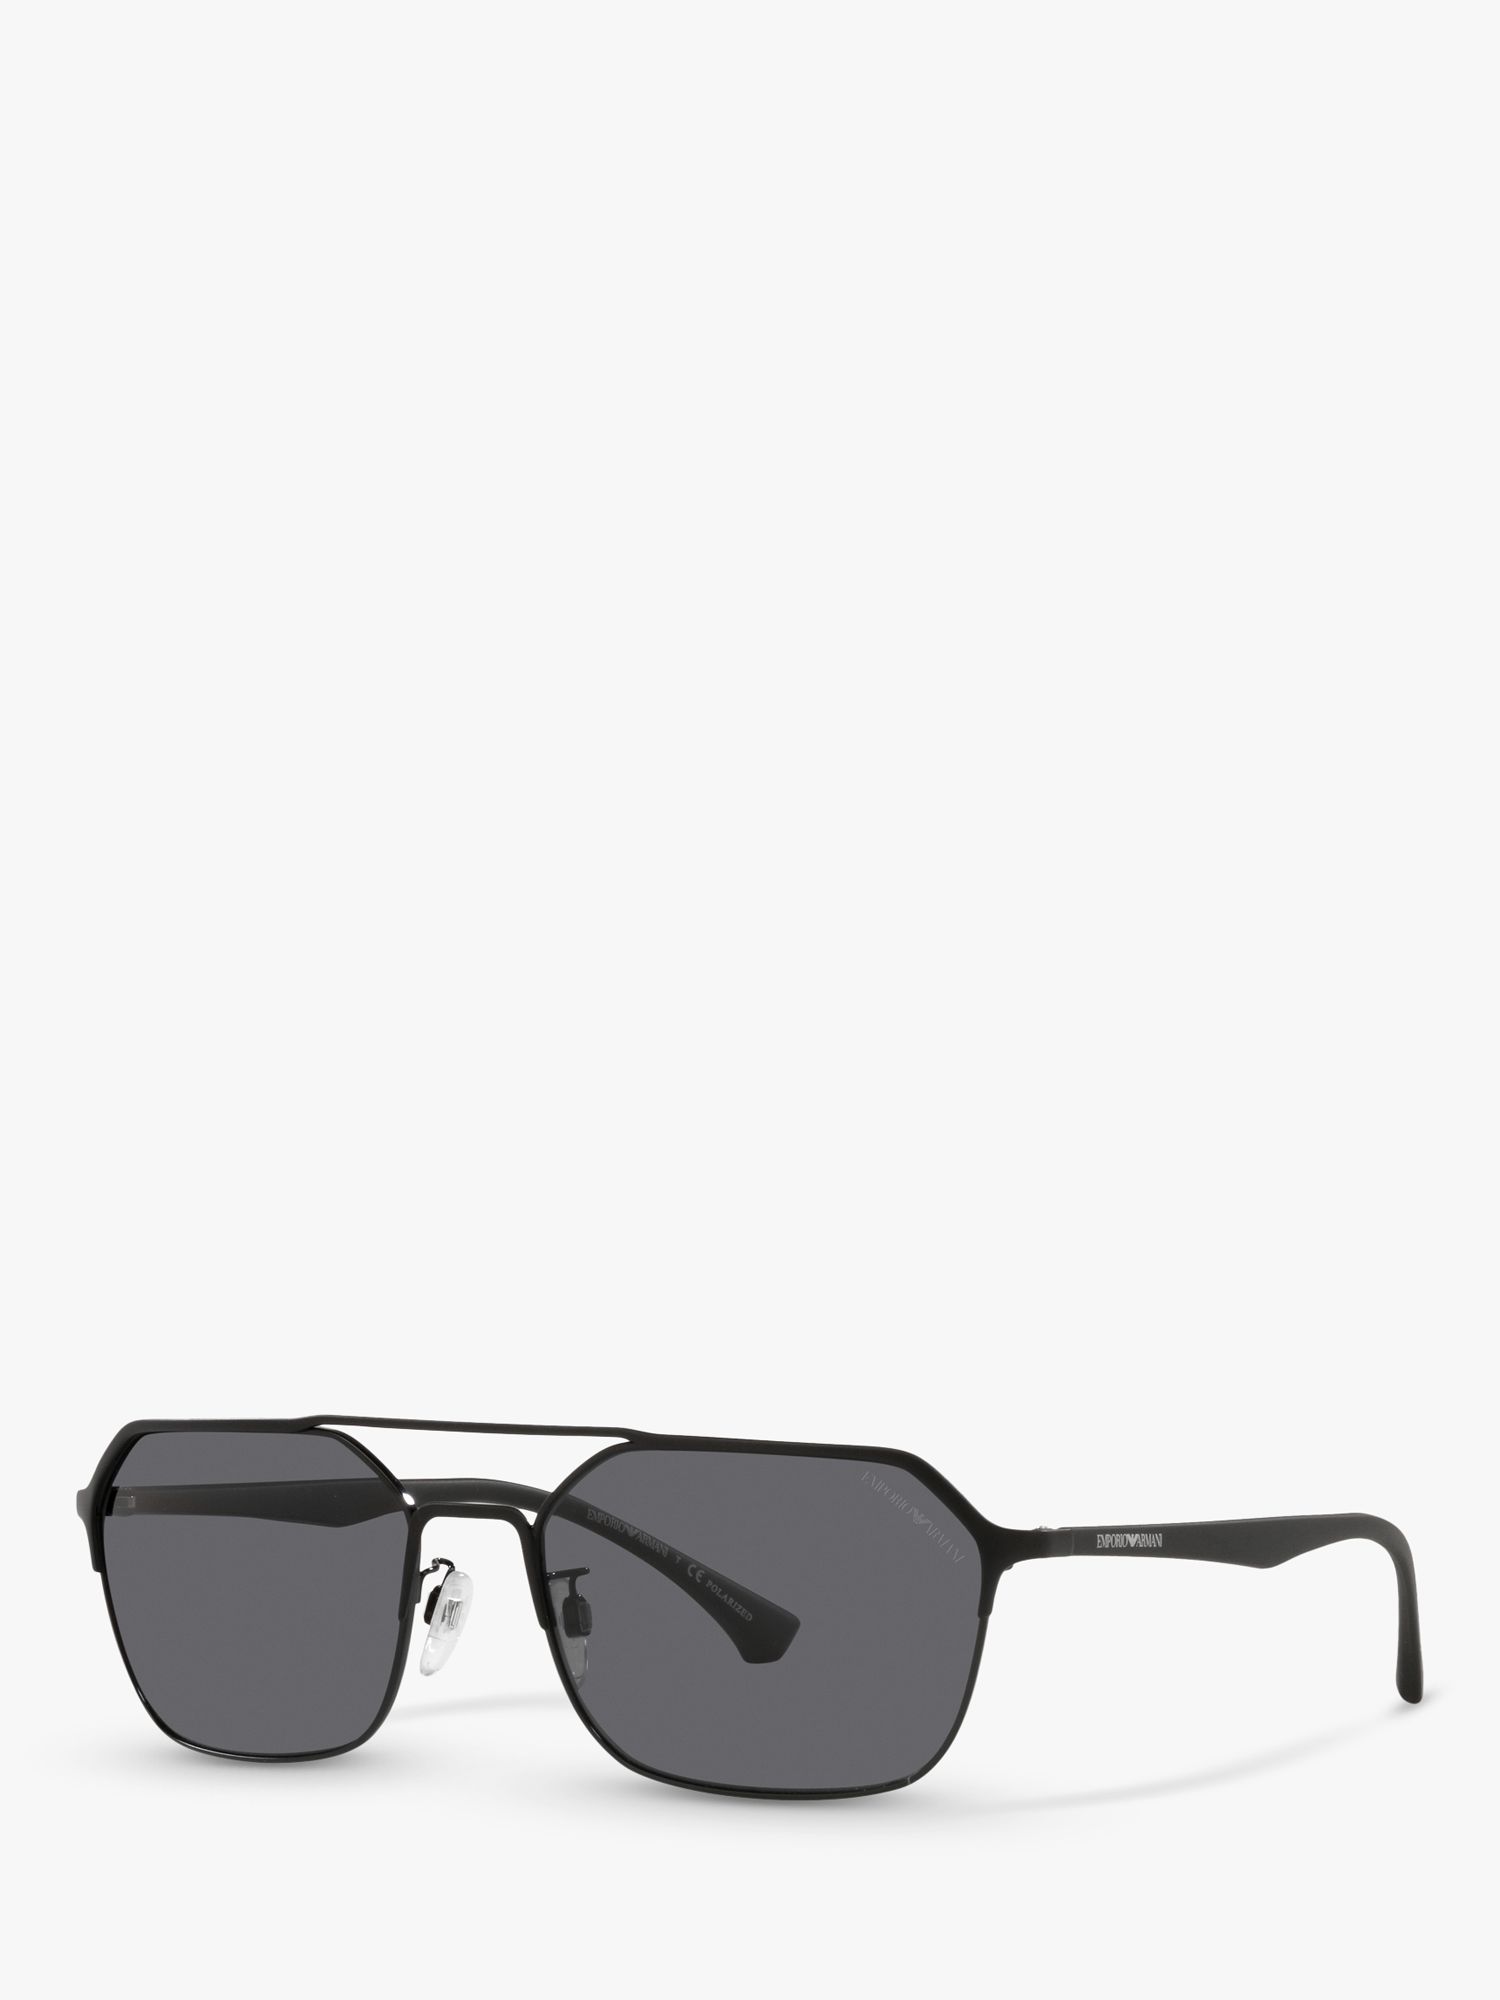 Emporio Armani EA2119 Men's Rectangular Polarised Sunglasses, Matte/Shiny  Black at John Lewis & Partners